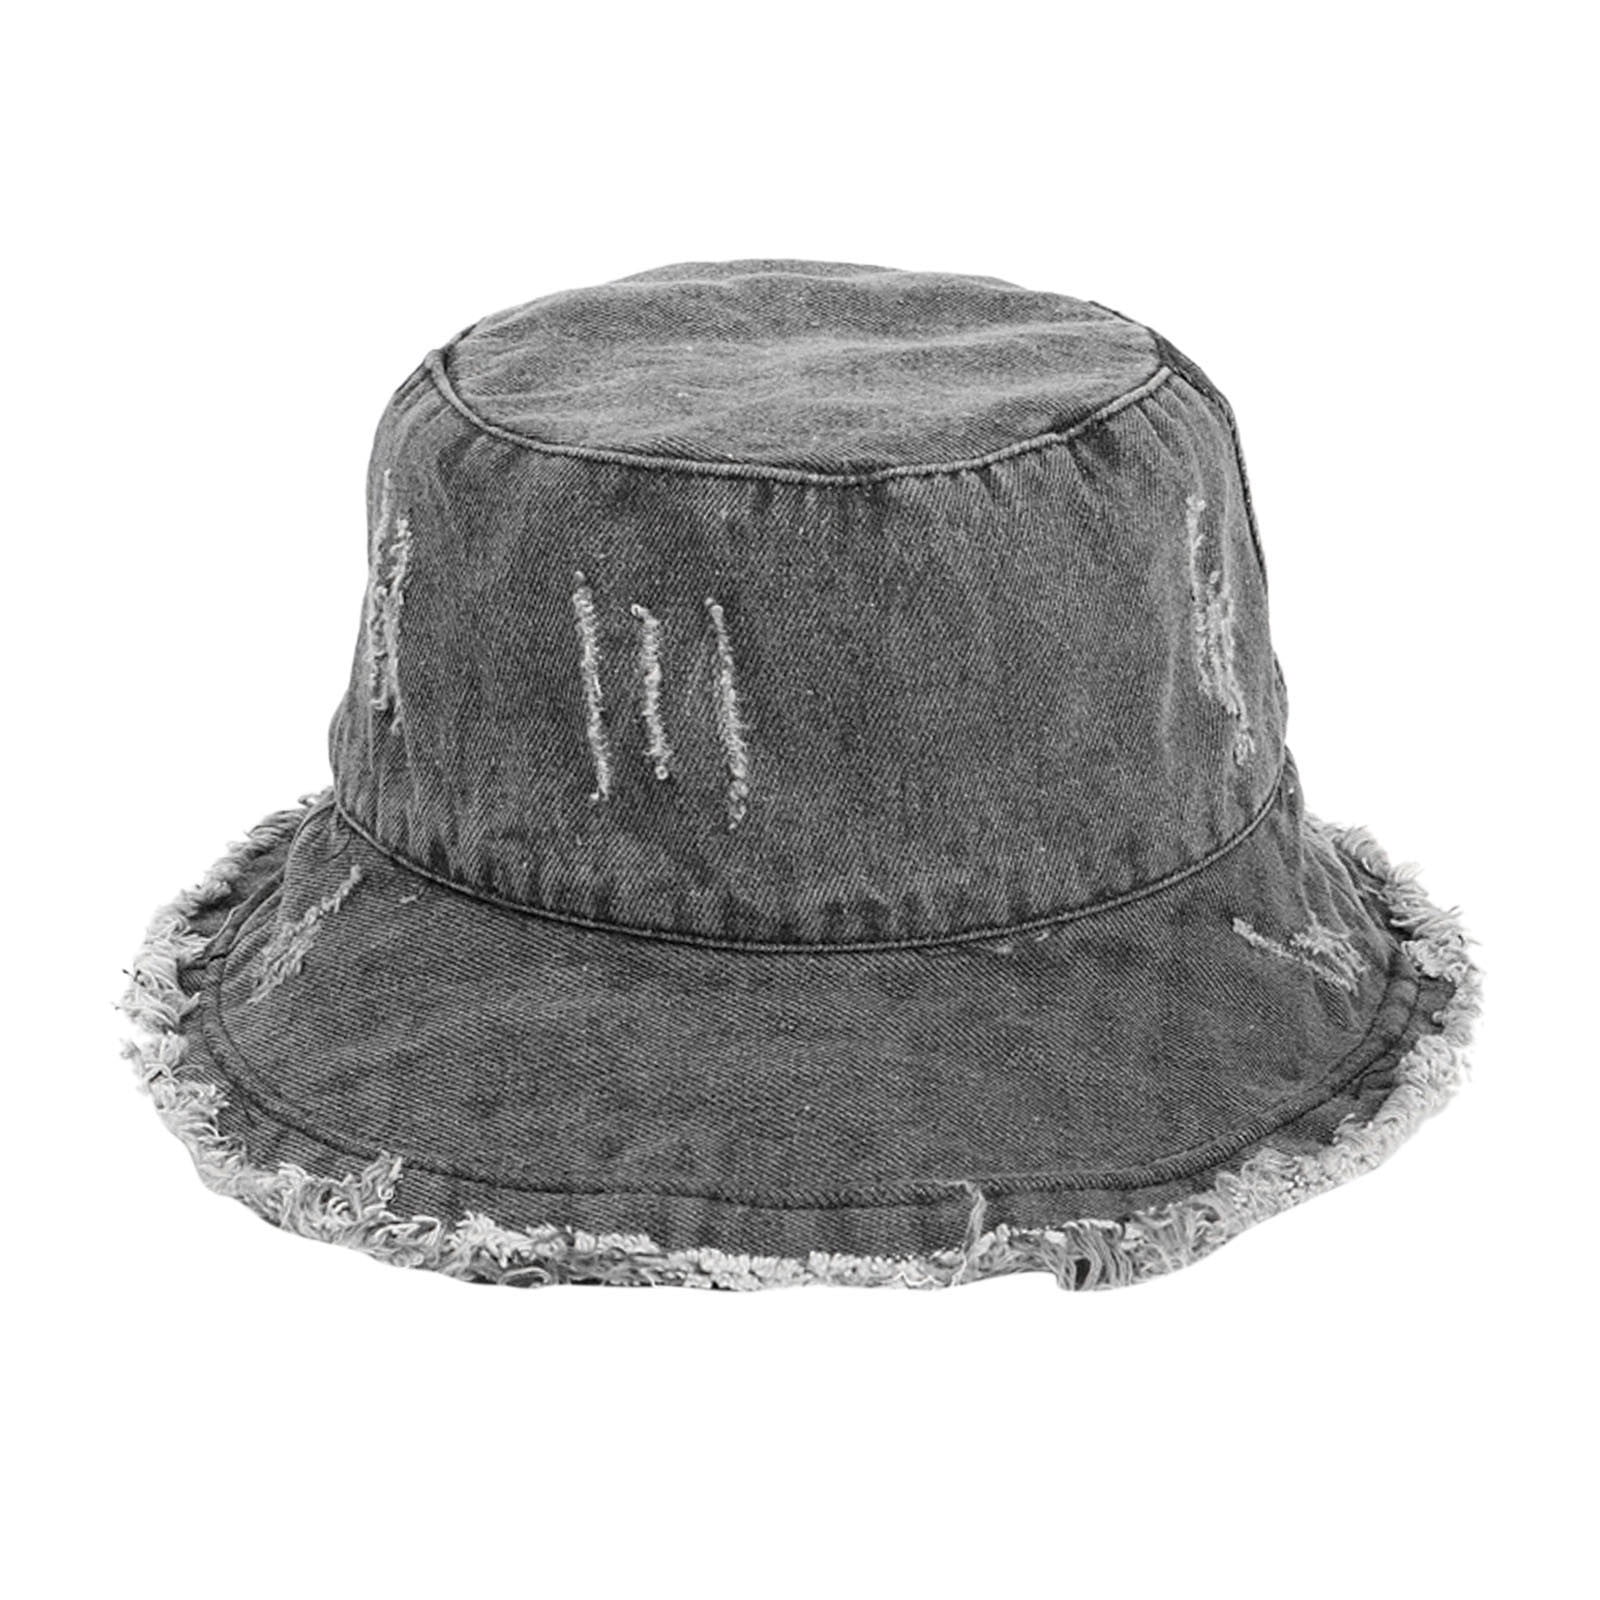 gyujnb Denim Bucket Hats For Men Women Portable Travel Hat Collapsible ...